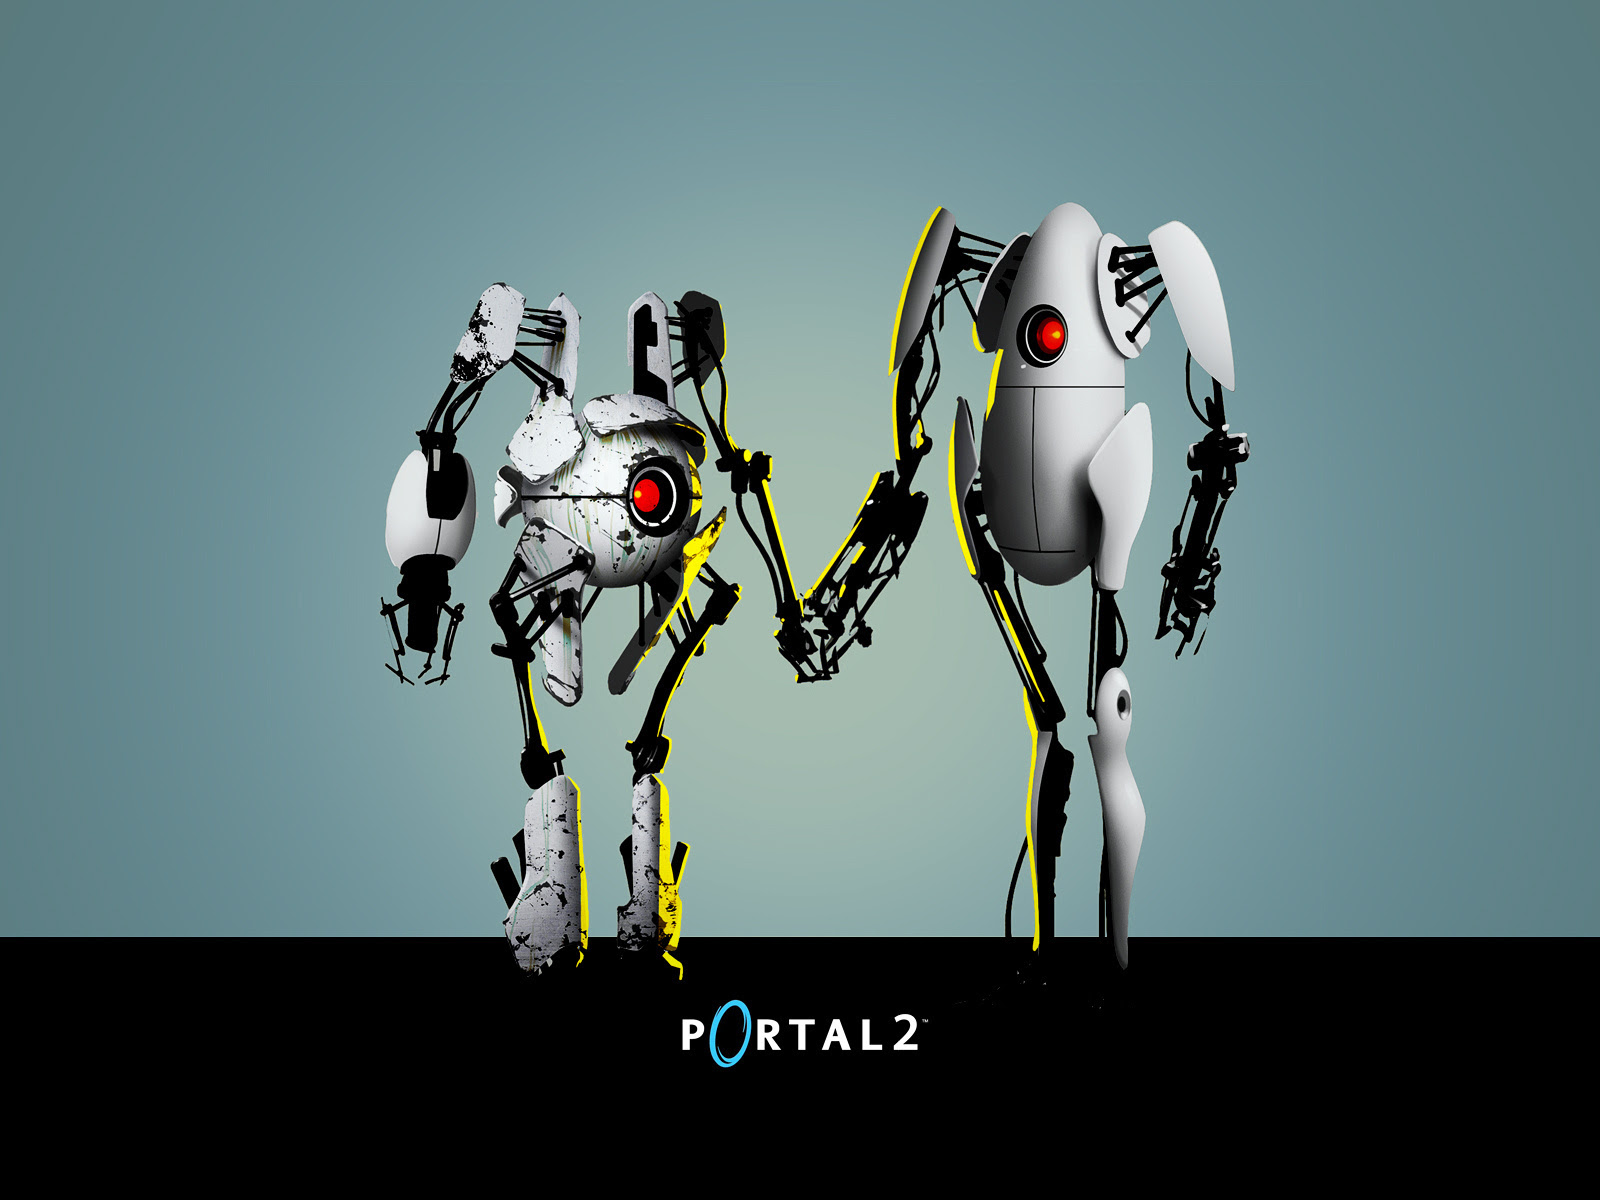 Сайт про портал. Портал 2. Portal 2 роботы. Портал из портал 2. Портал 2 арт.